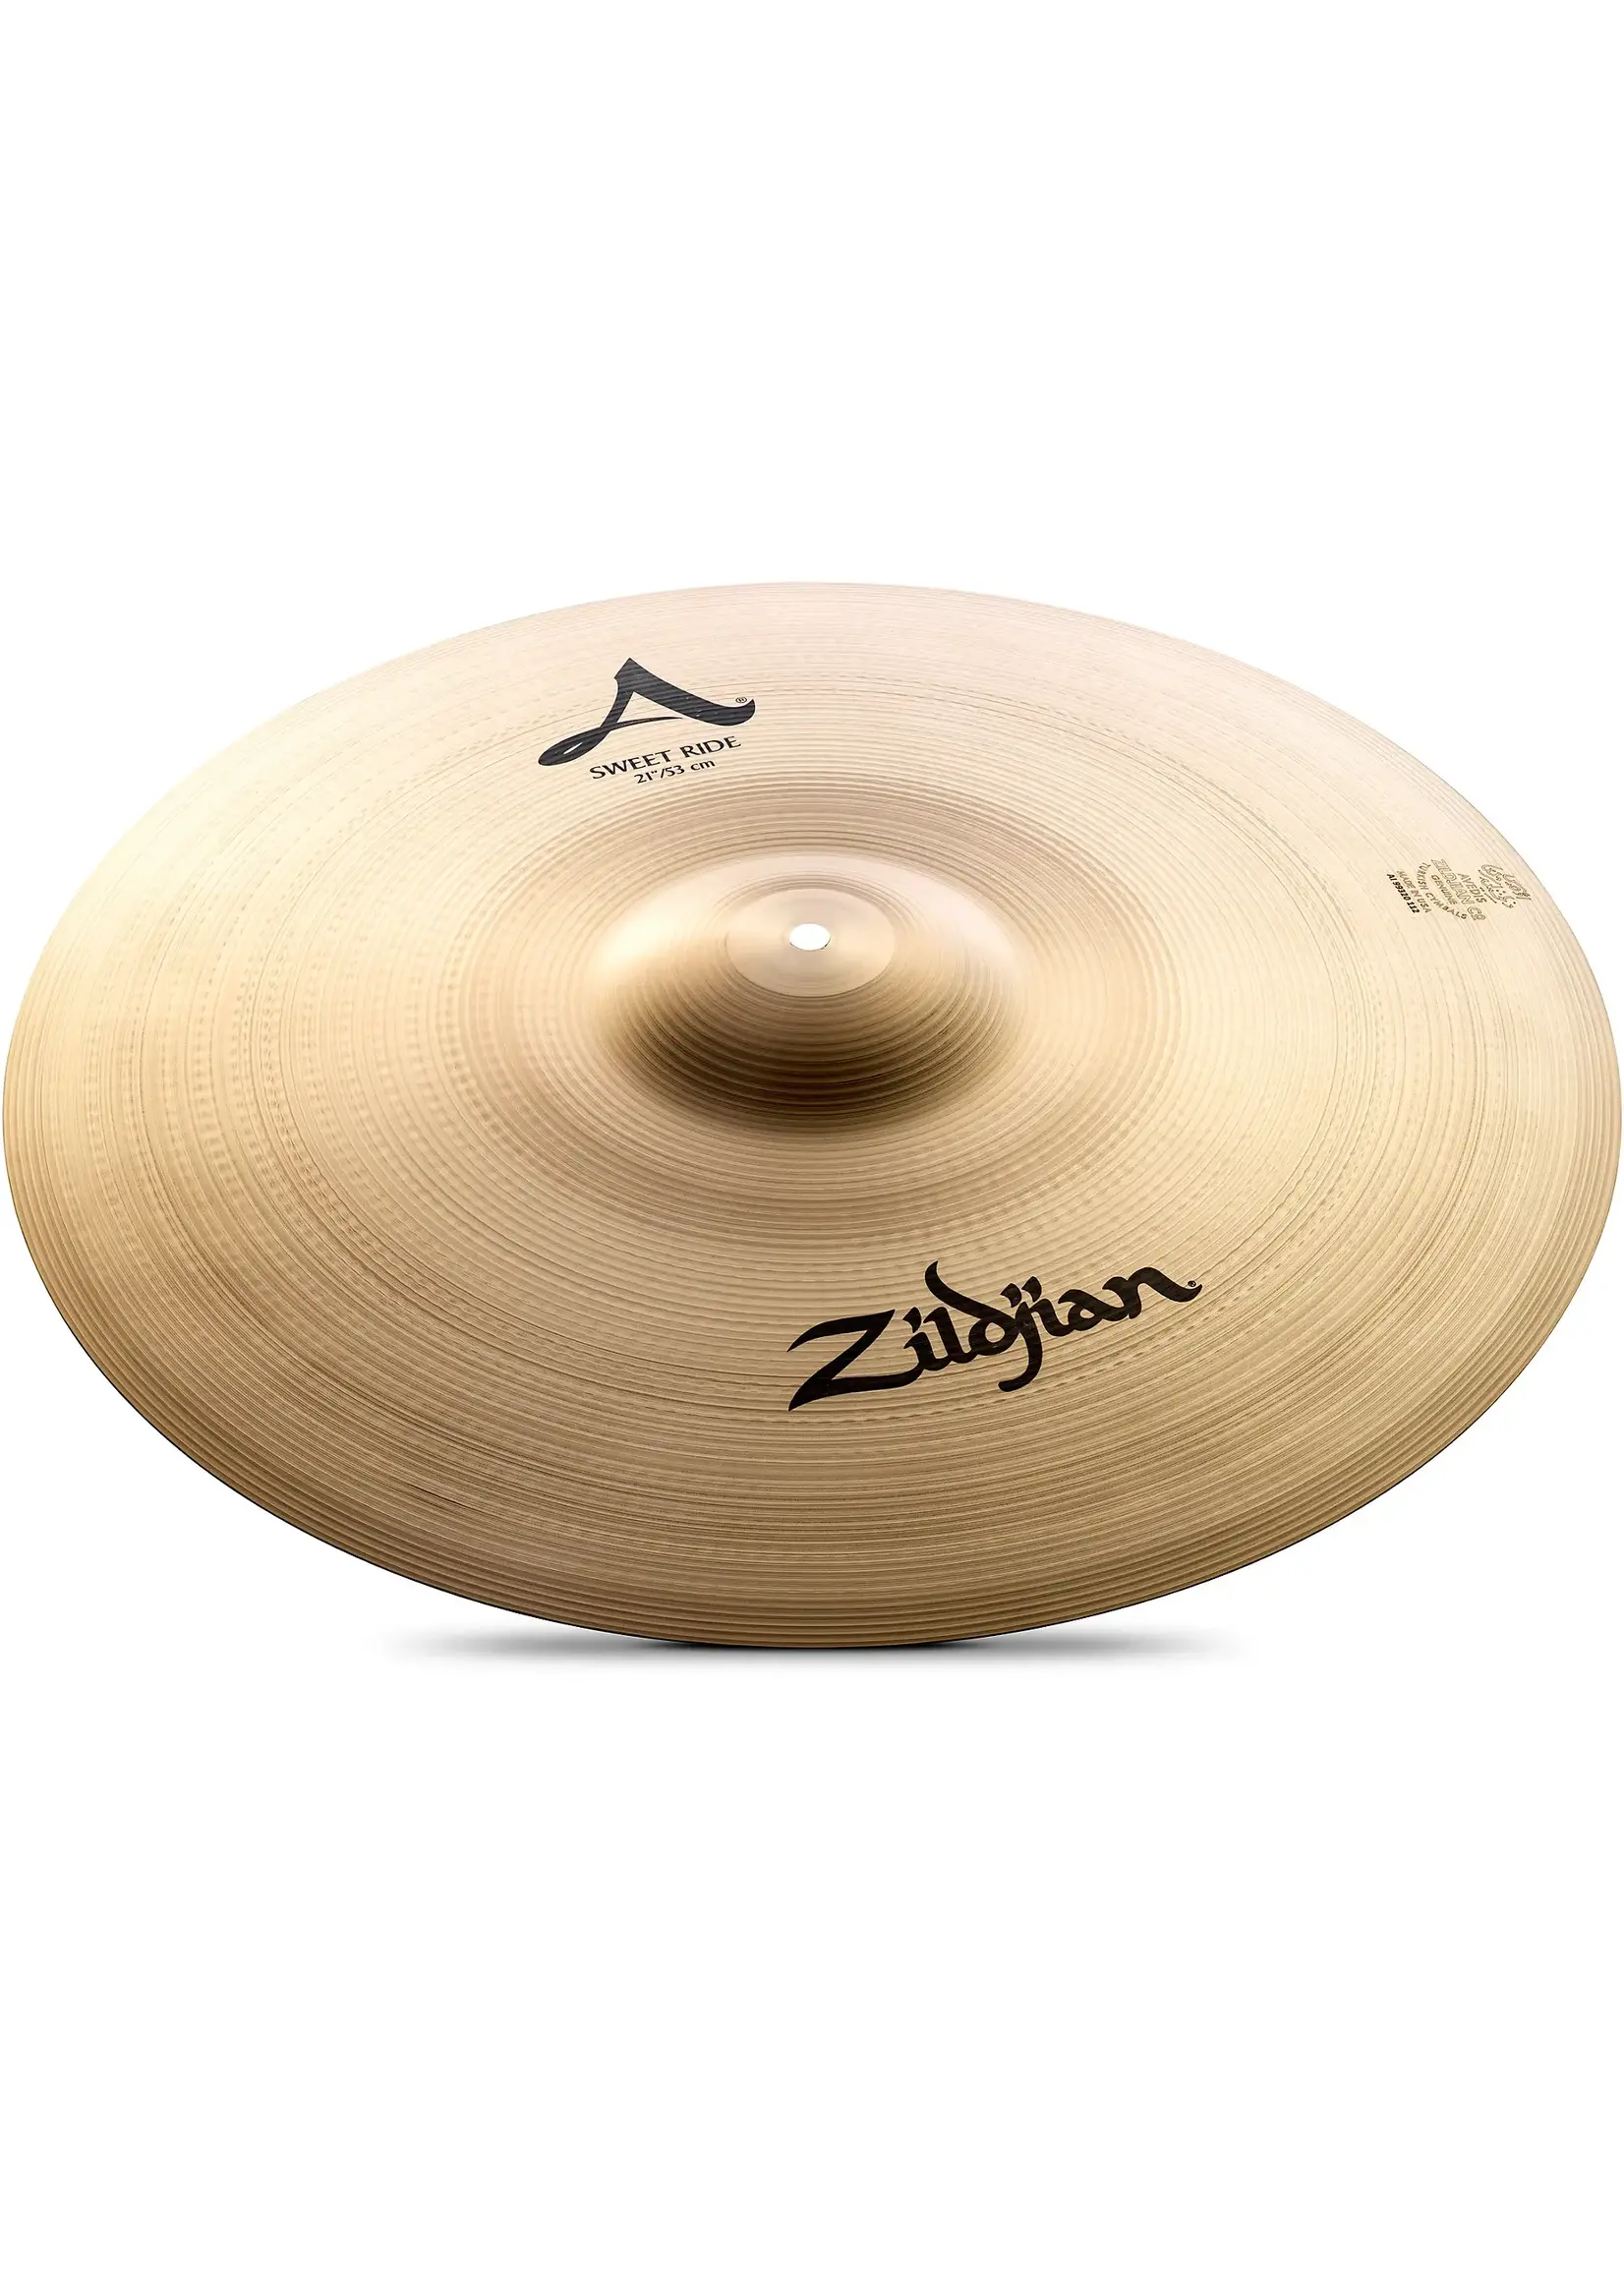 Zildjian Zildjian A Series Sweet Ride Cymbal 21 in.